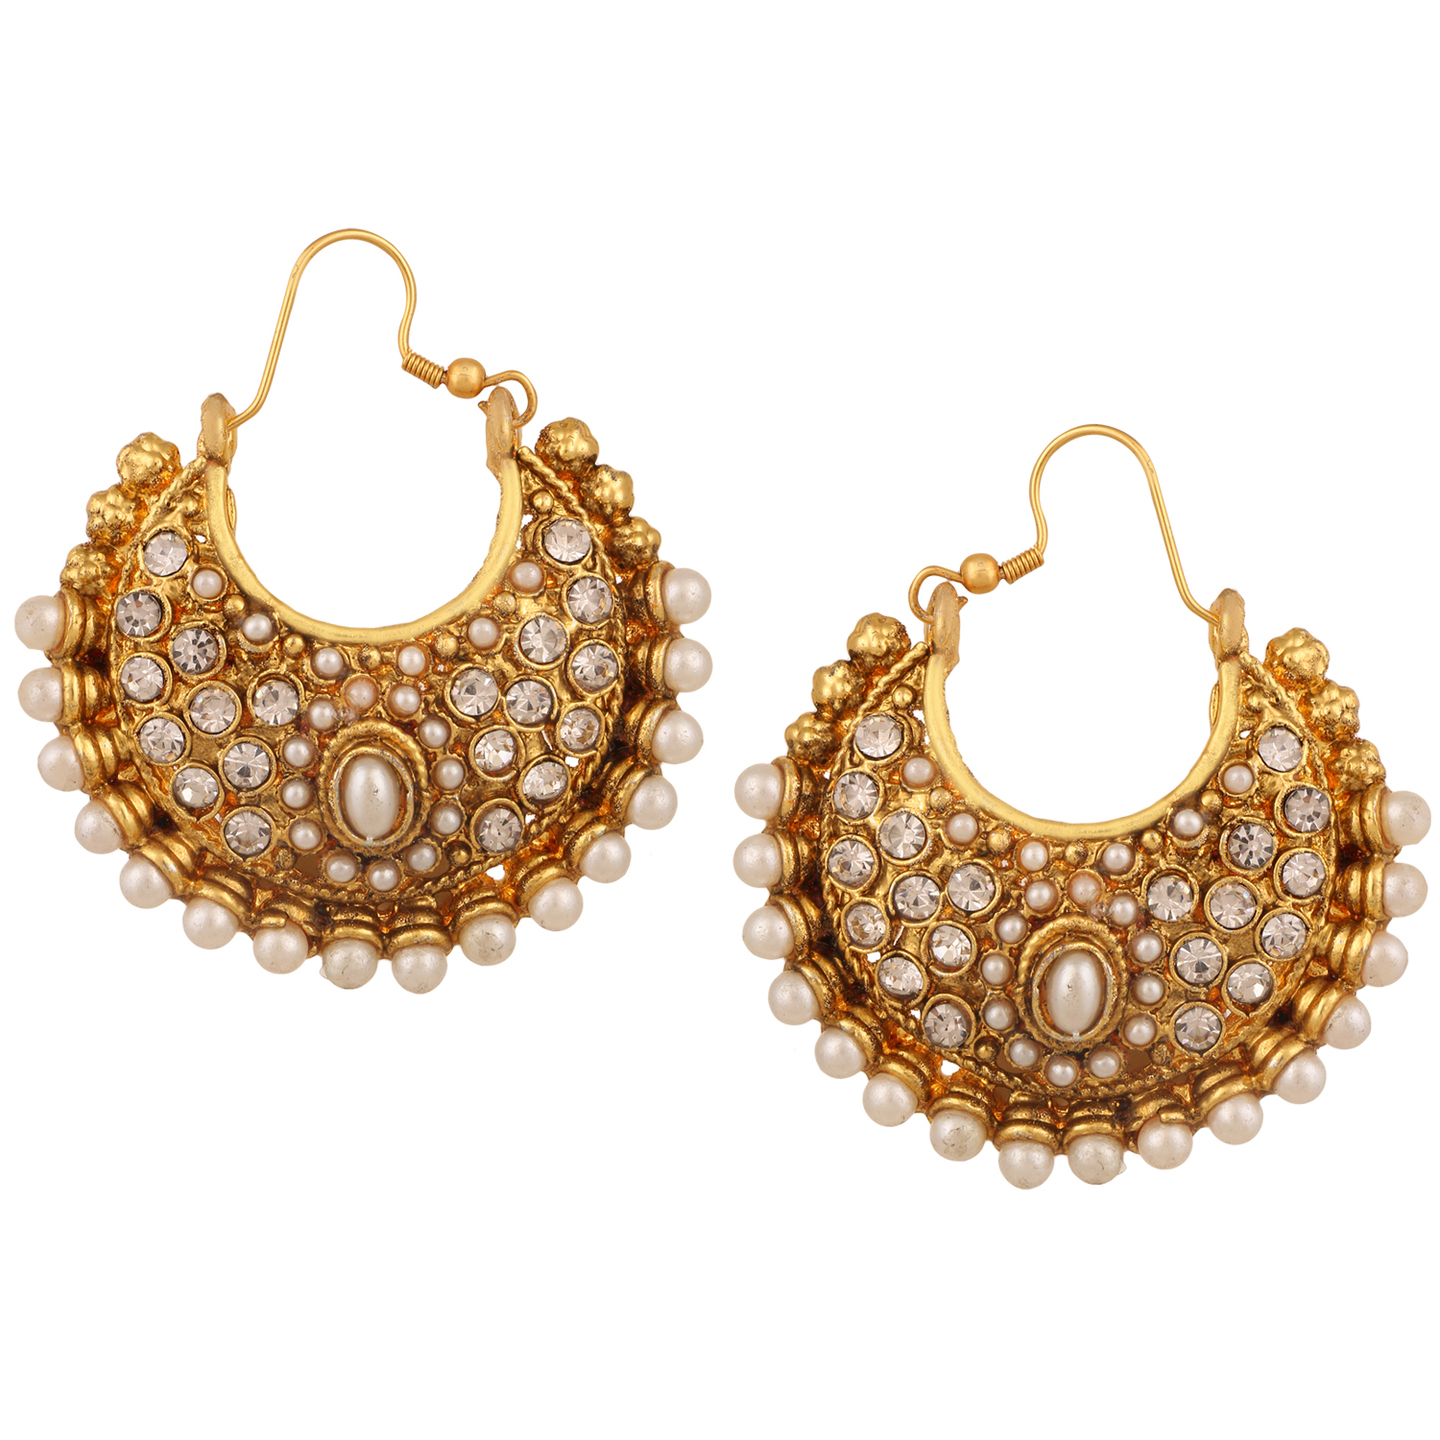 Chandbali American diamond hoop earrings